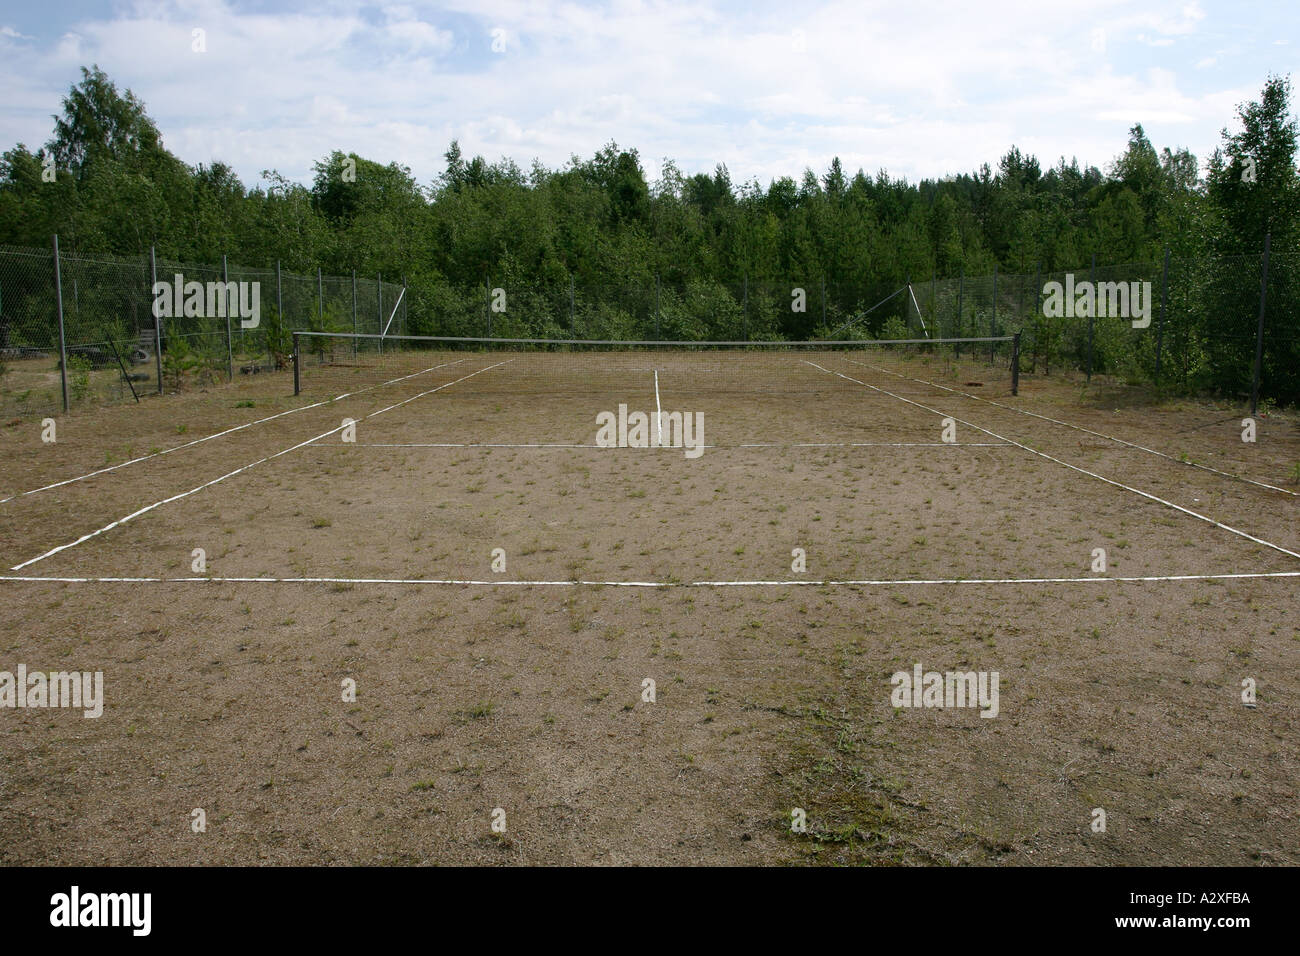 abandoned-tennis-court-A2XFBA.jpg